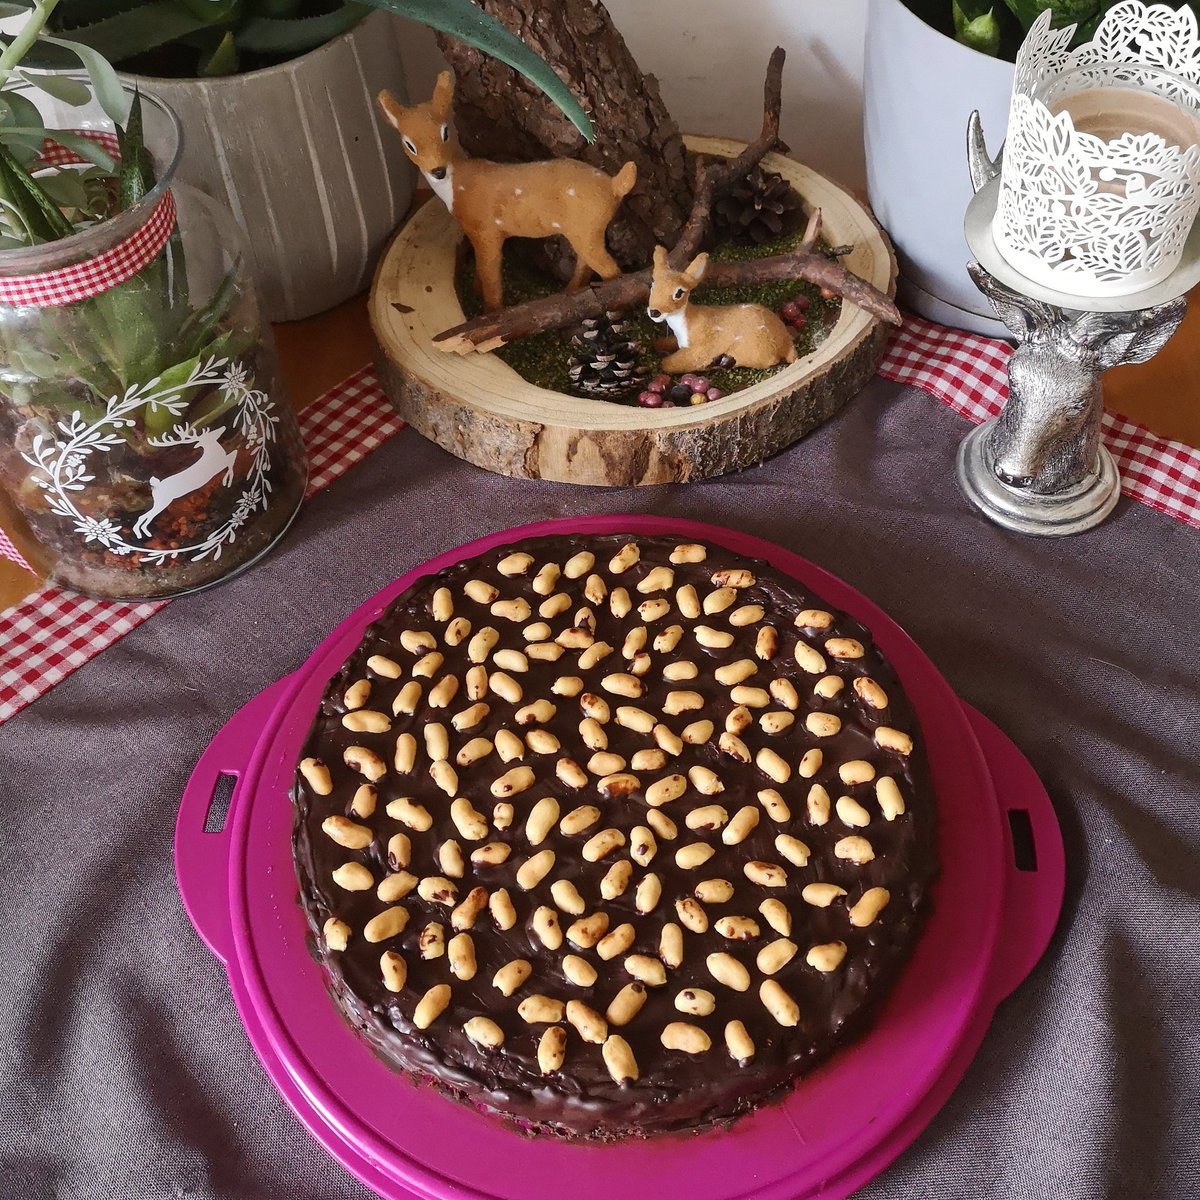 Peanut butter cheesecake for mom's birthday. 🥜

#peanutbuttercheesecake #cake #cakelover #cakelove #cakephotography #cakephoto #baking #bakinglove #bakinglover #bakingfun #bakingtime #bakingmakesmehappy #bakingwithlove #bakingcakes #bakingislove